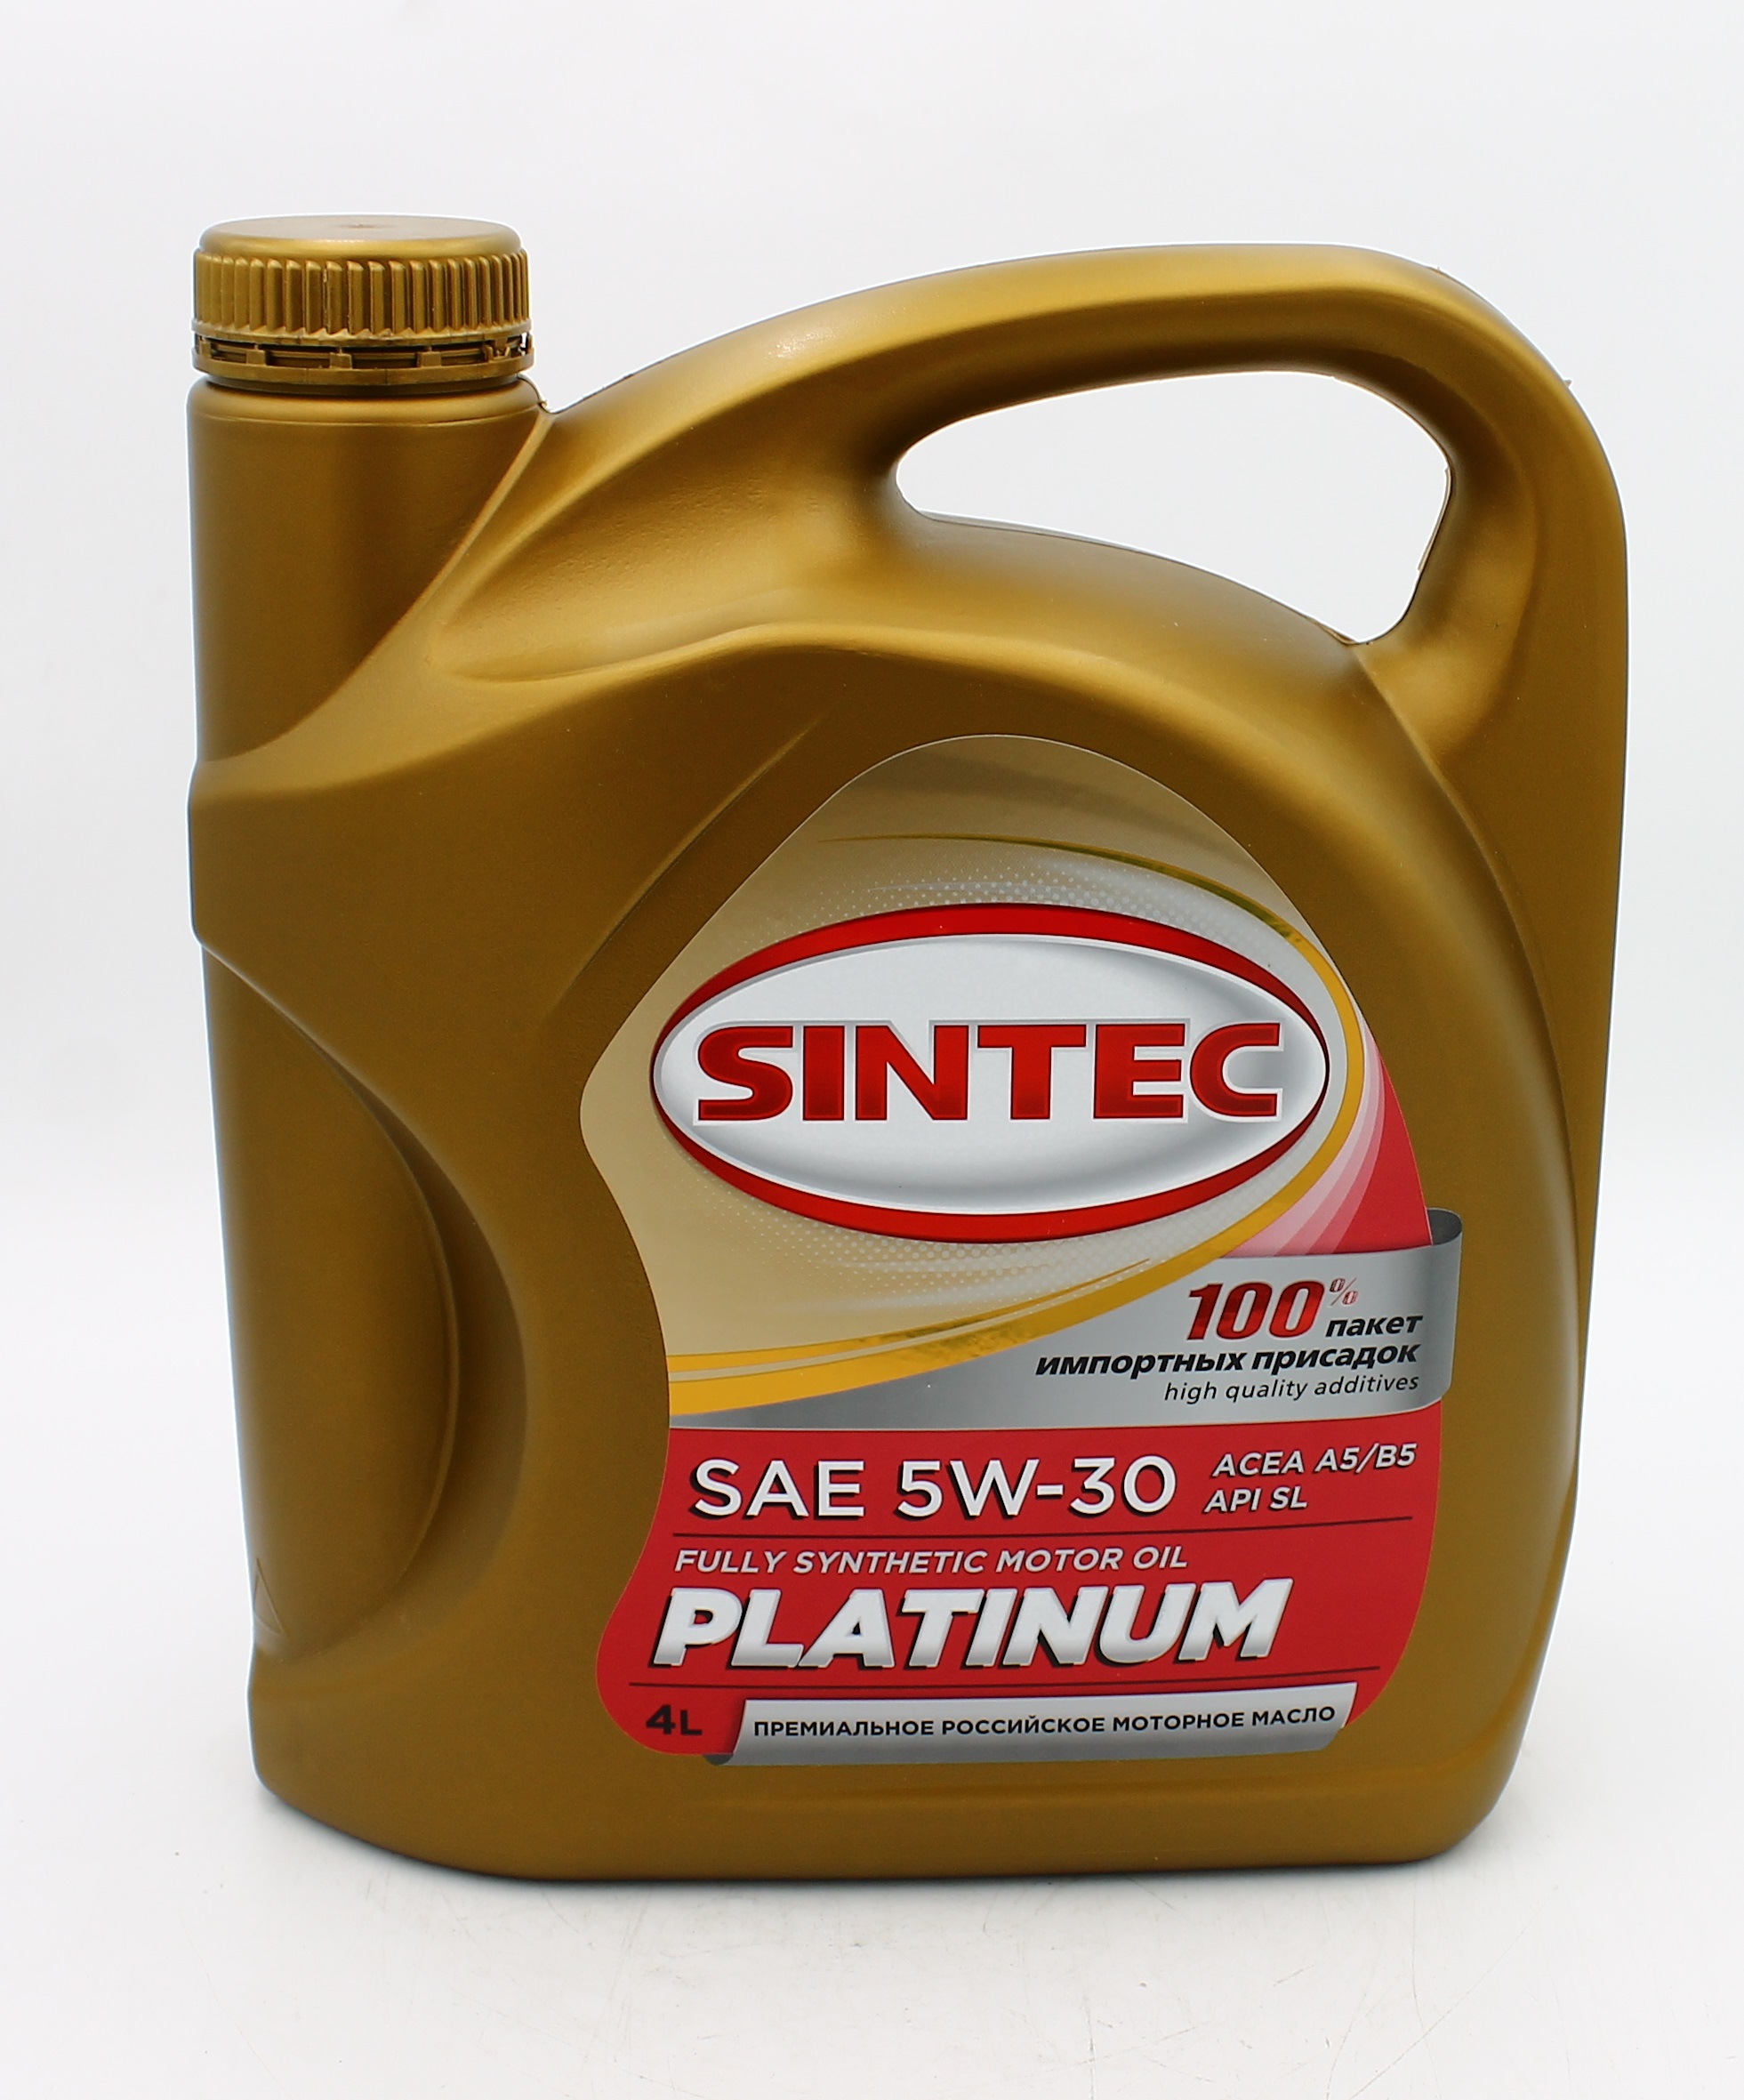 Sintec platinum sae 5w 30. Sintec Premium SAE 5w-30 ACEA a3/b4, 1l. Масло Синтек. SAE 0w-20.